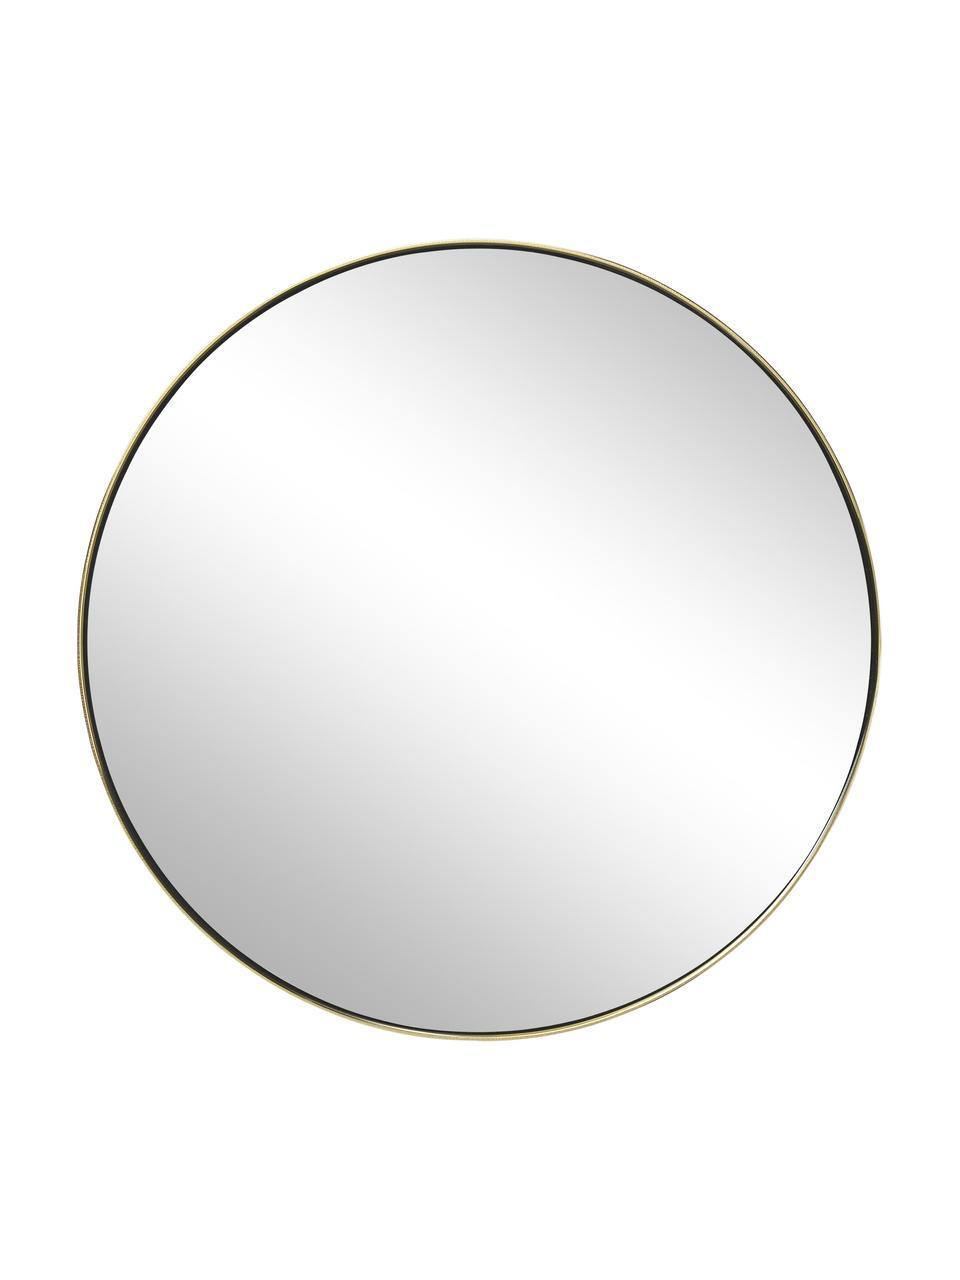 Sada kulatých zrcadel se zlatým kovovým rámem Lacie, 3 díly, Zlatá, Sada s různými velikostmi